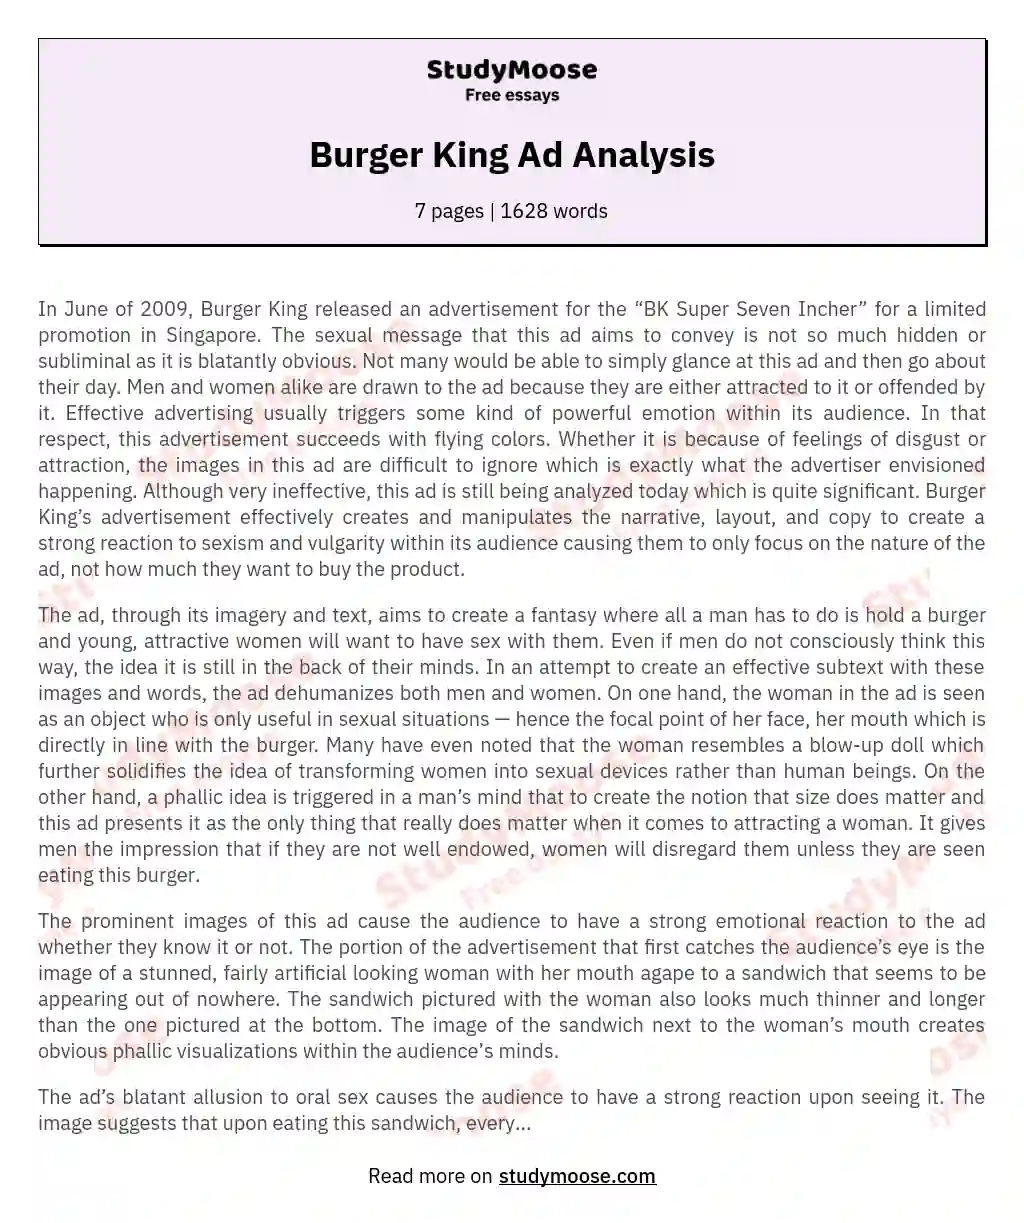 Burger King Ad Analysis essay